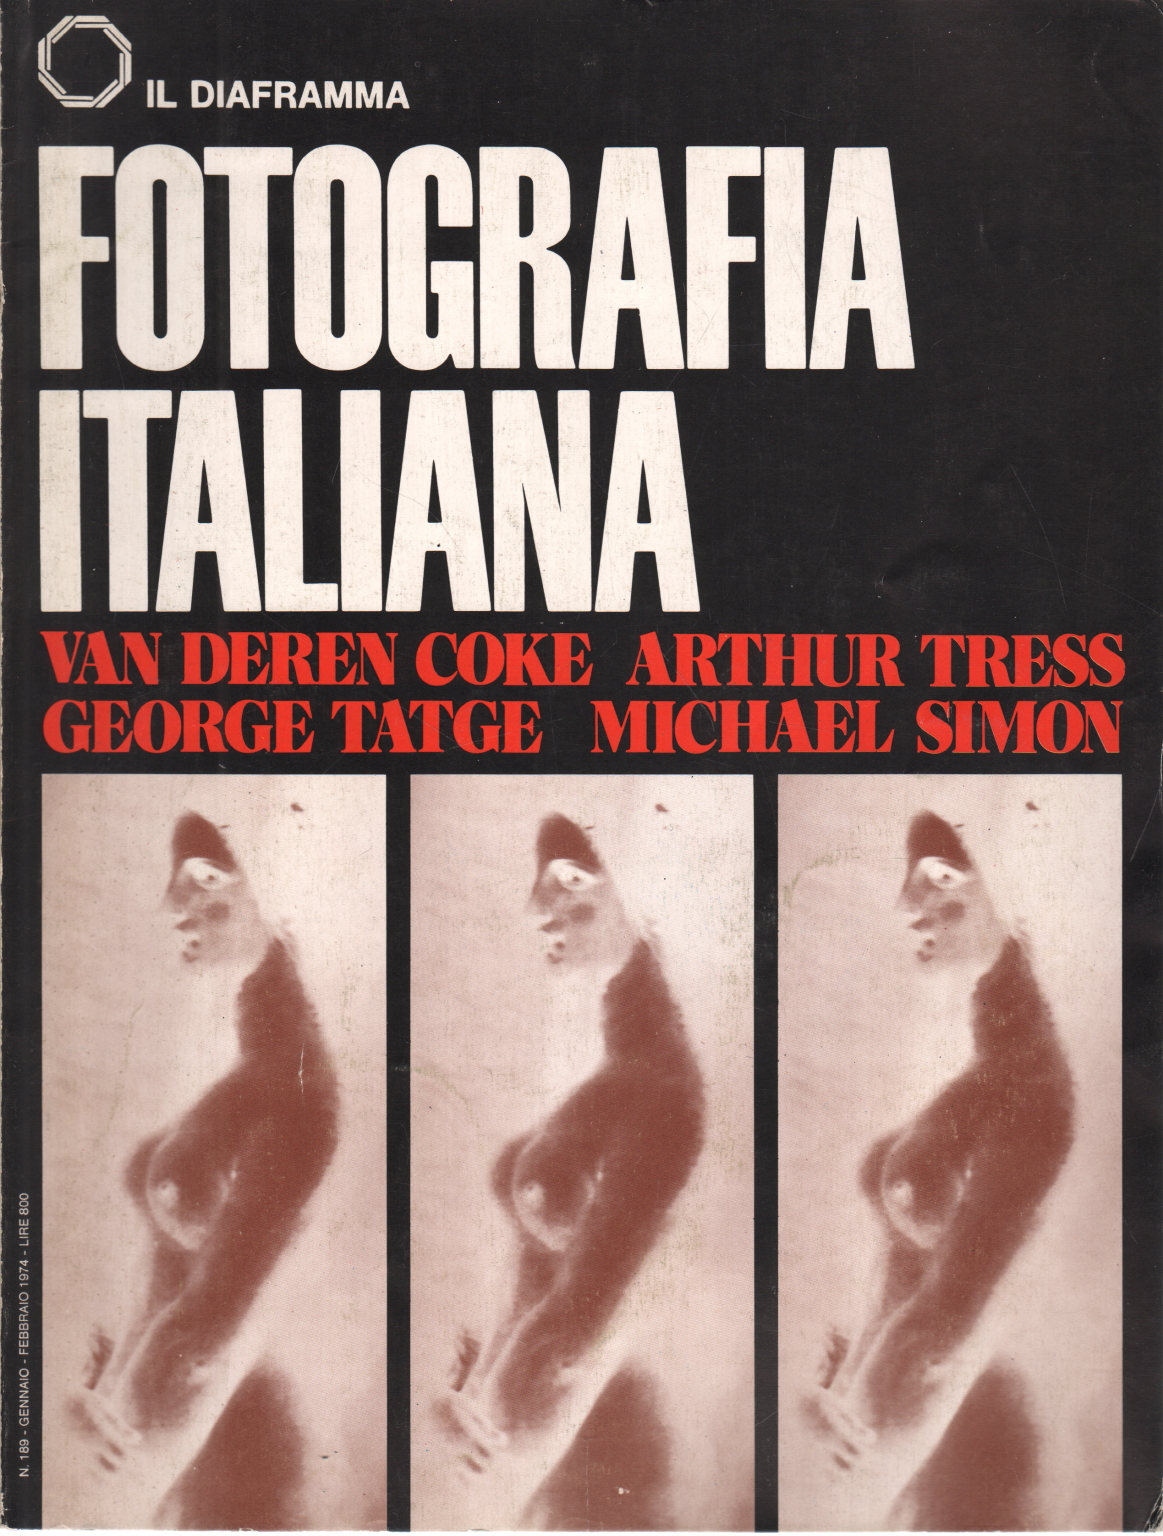 Il diaframma: Fotografia italiana (n.189 febbraio, AA.VV.